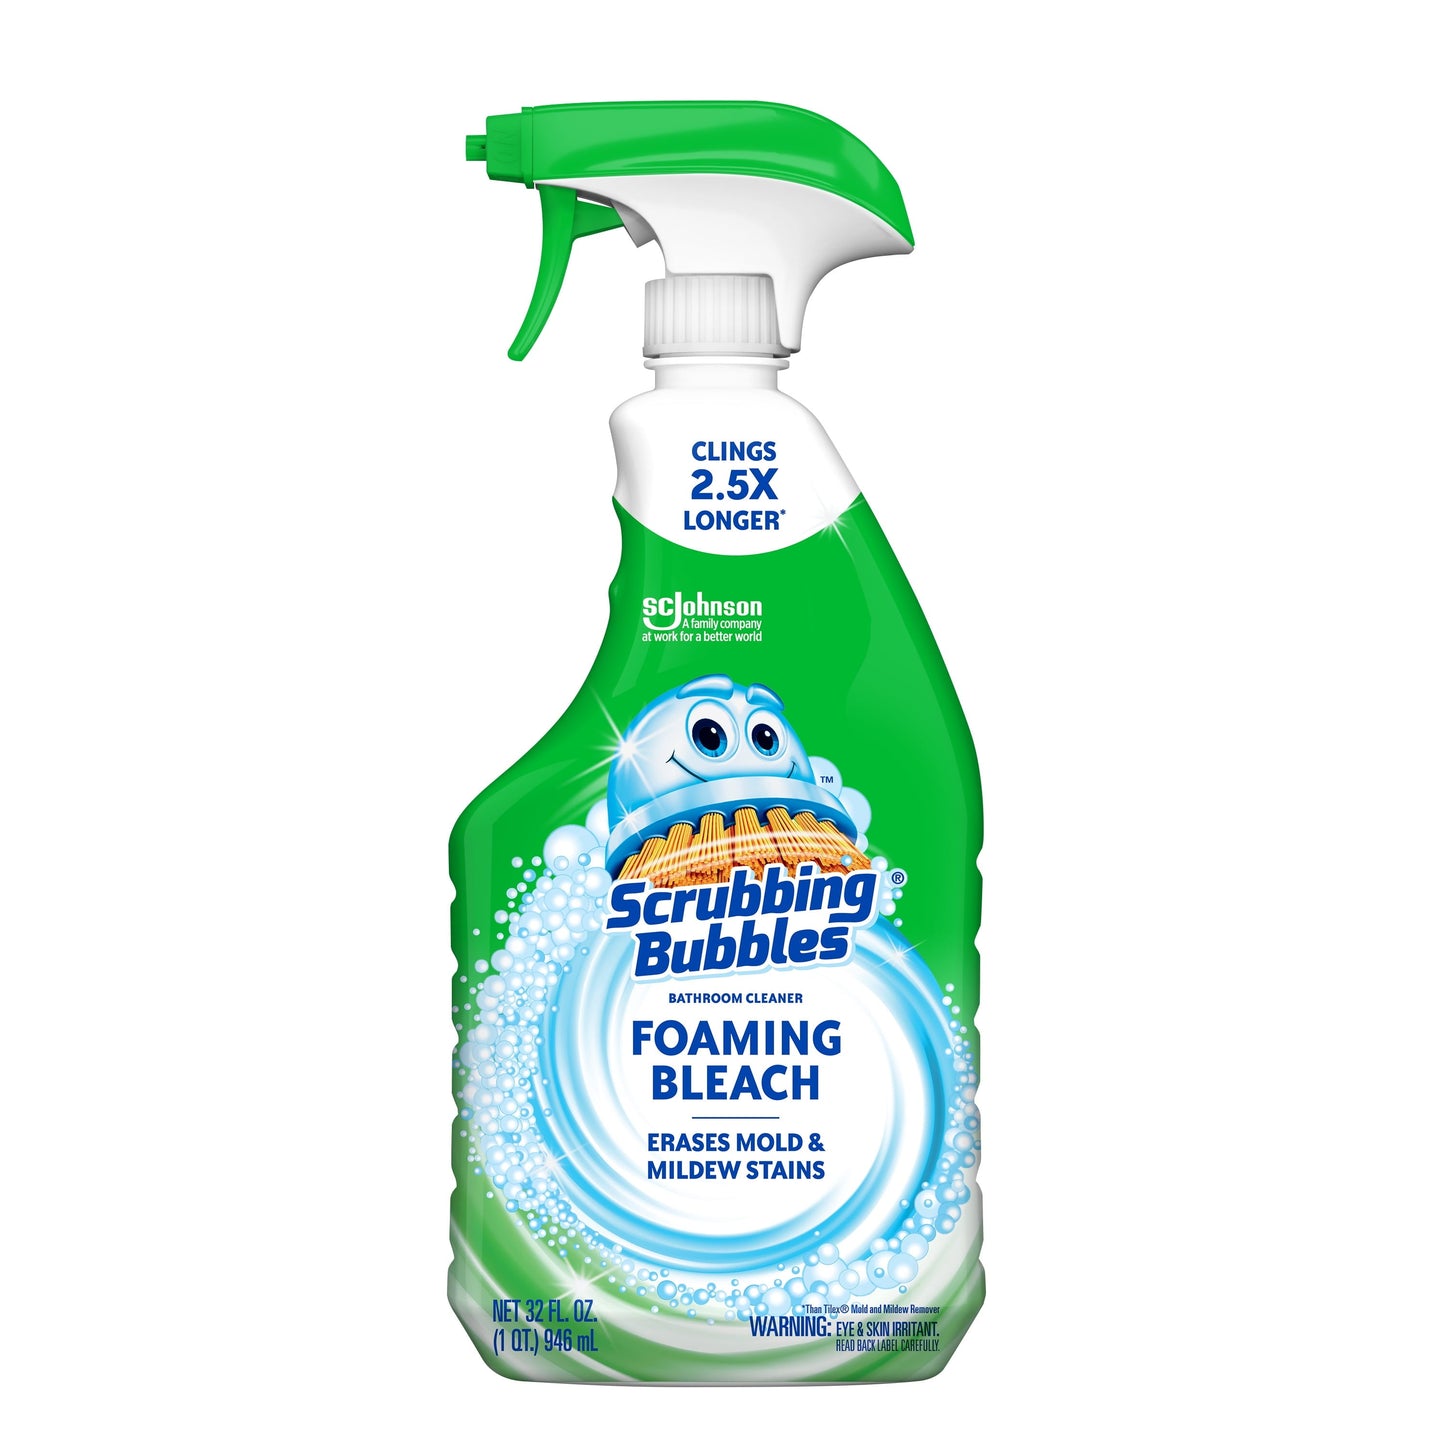 Scrubbing Bubbles Foaming Bleach Bathroom Cleaner, Trigger Bottle - 32oz